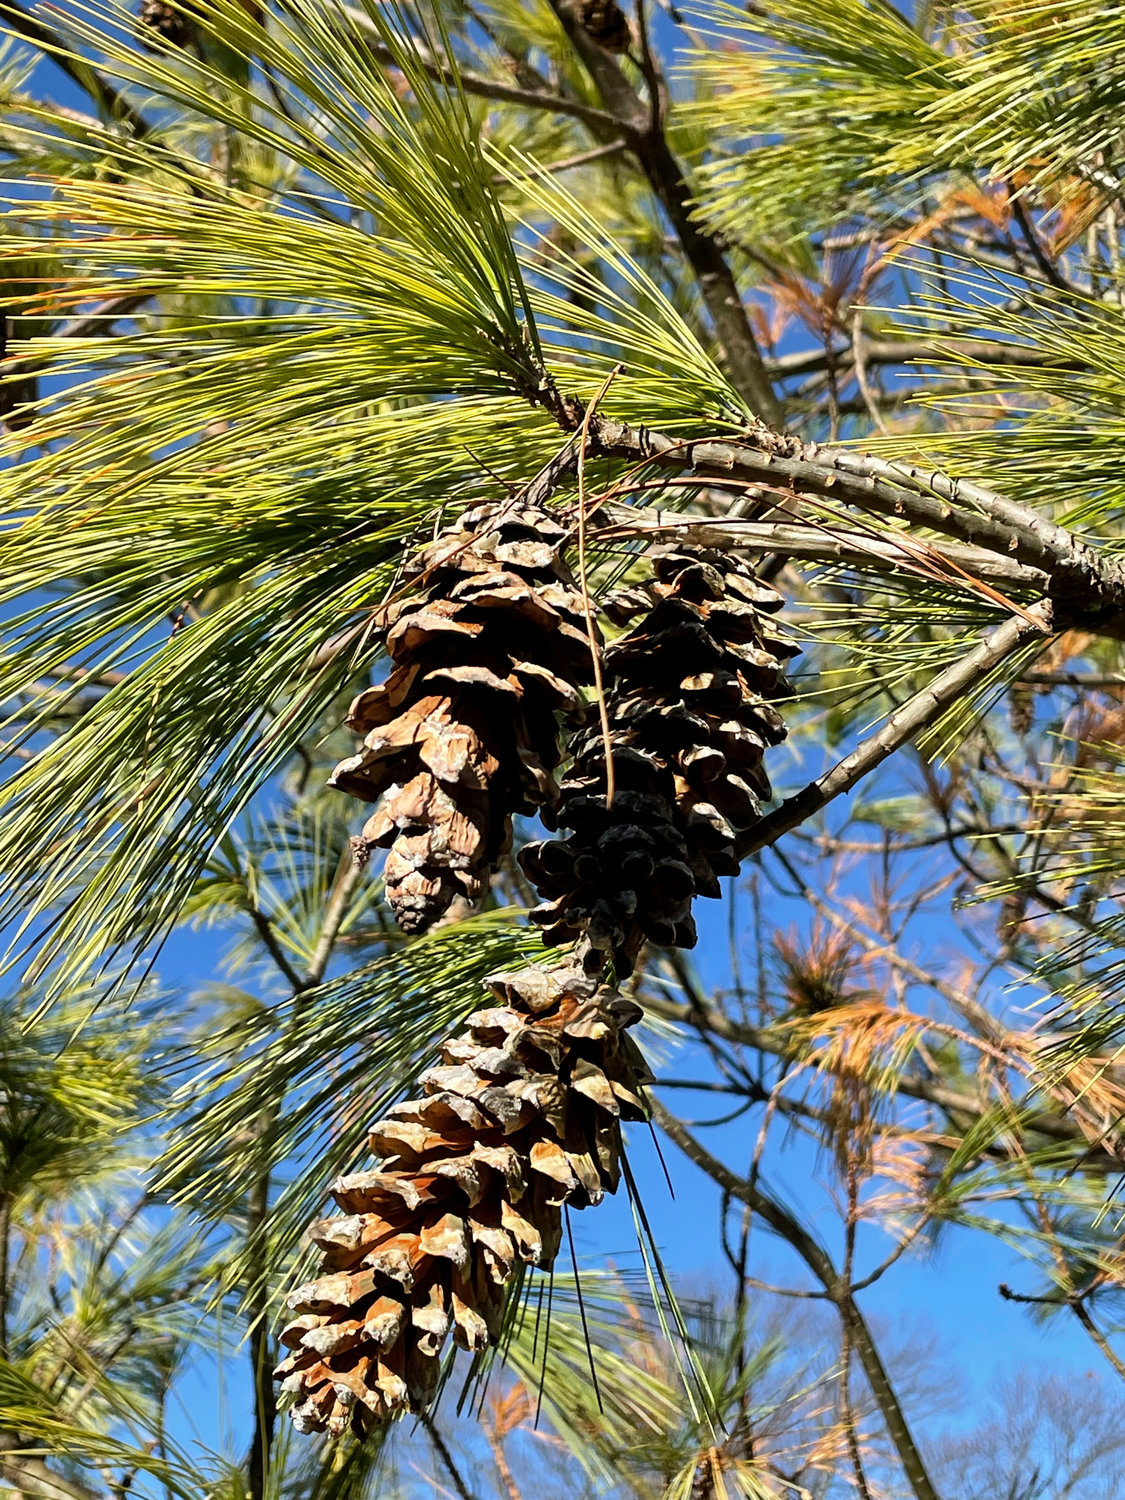 The robust, banana-shaped, light-brown cones of a Himalayan pine (Pinus wallichiana) tree.